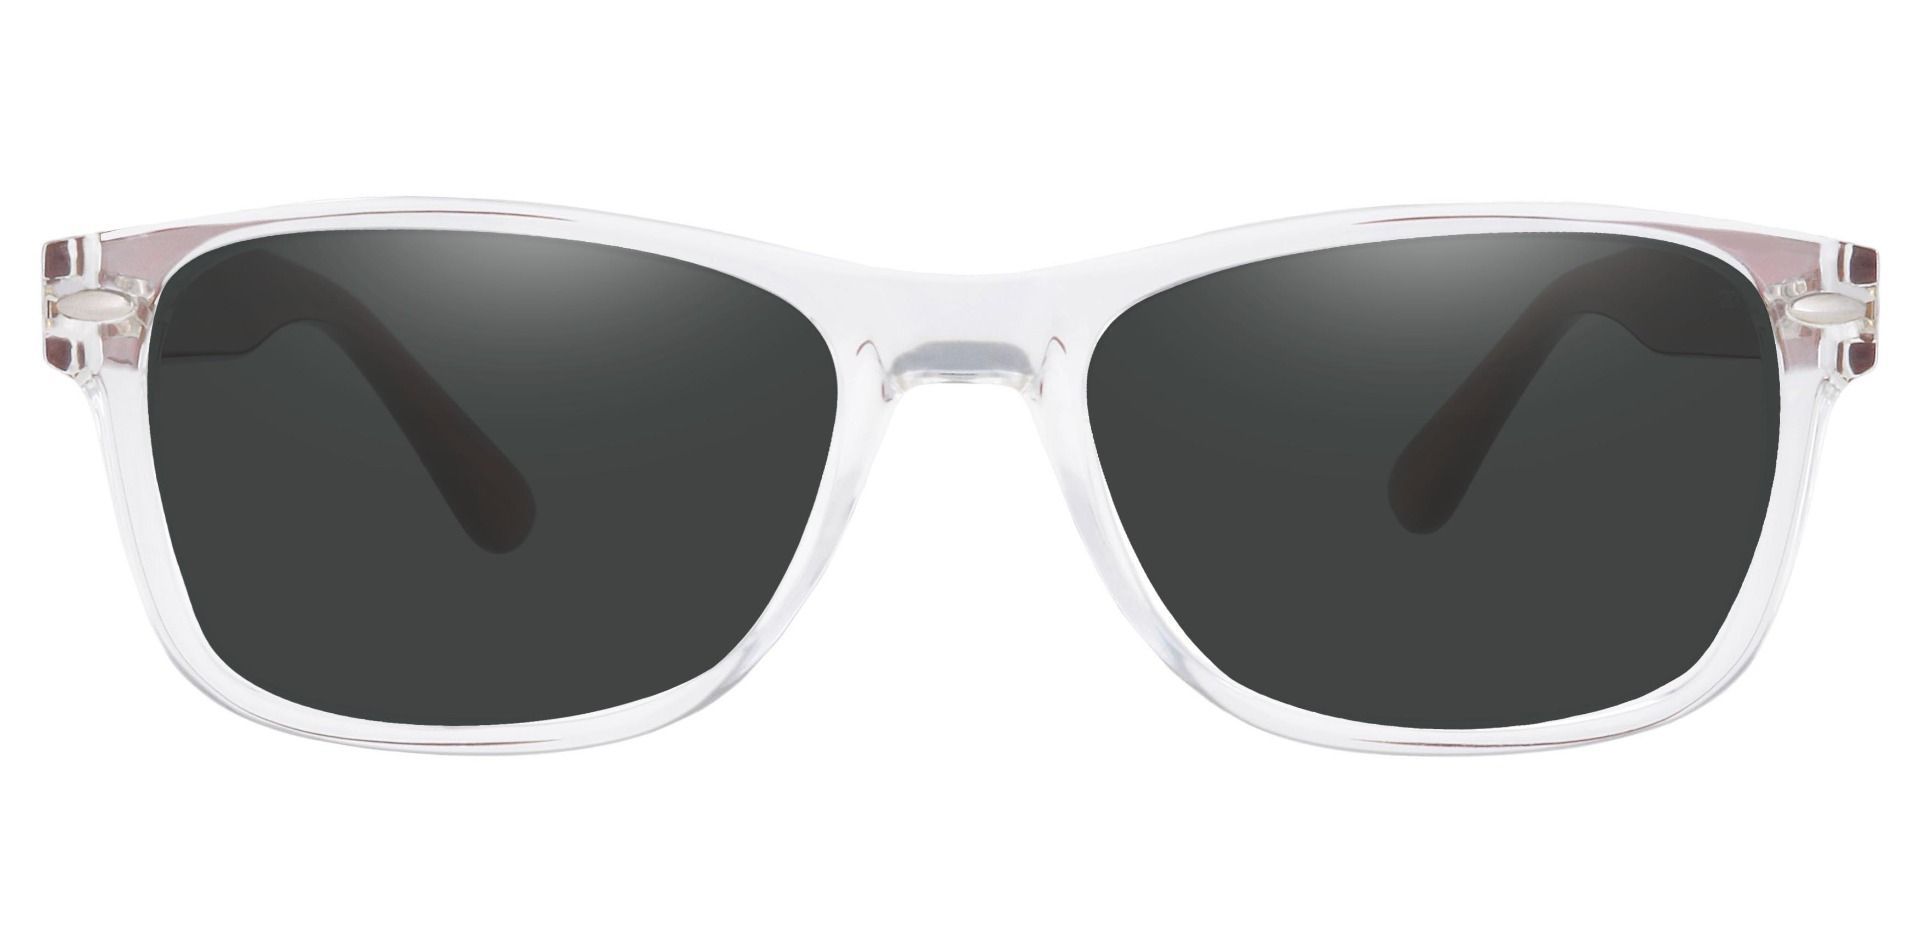 Kent Rectangle Prescription Sunglasses - Clear Frame With Gray Lenses